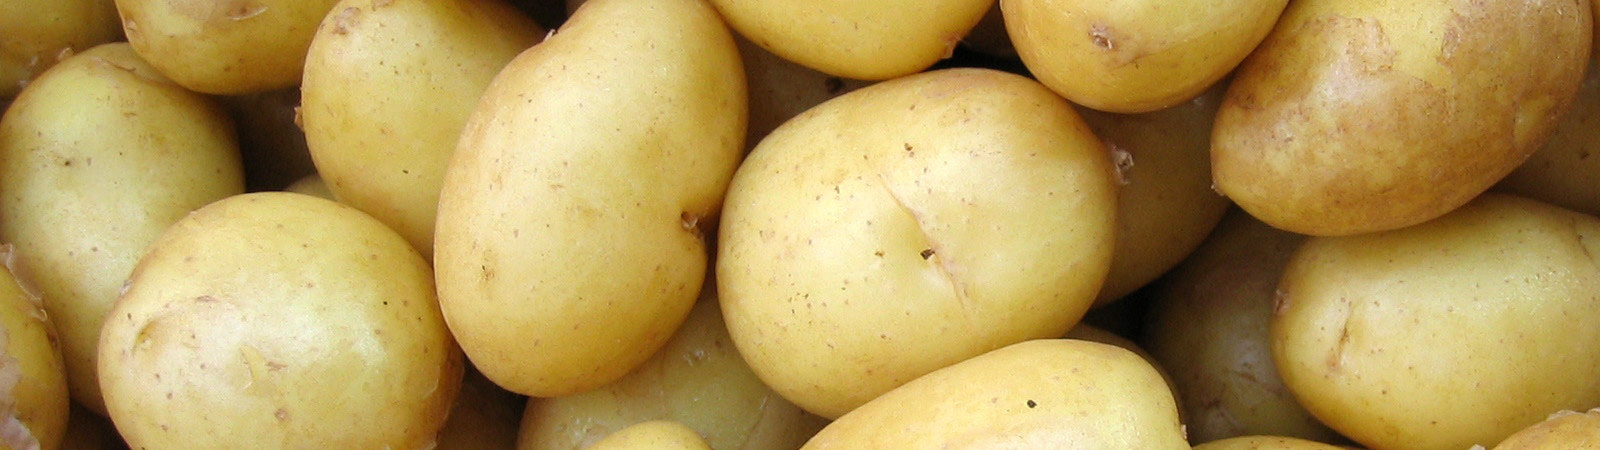 Patata - Cultivos Gat Fertilíquidos